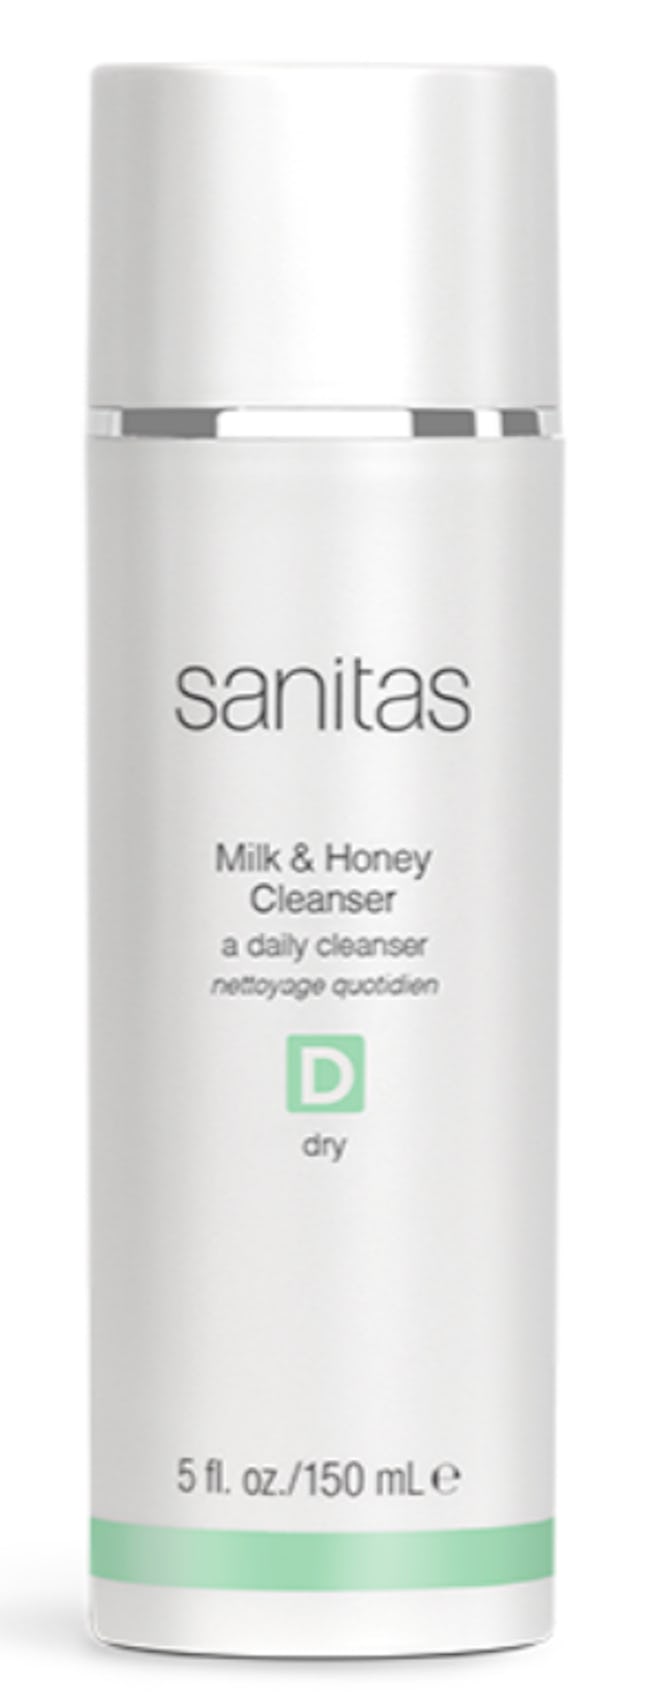 Sanitas Milk & Honey Cleanser